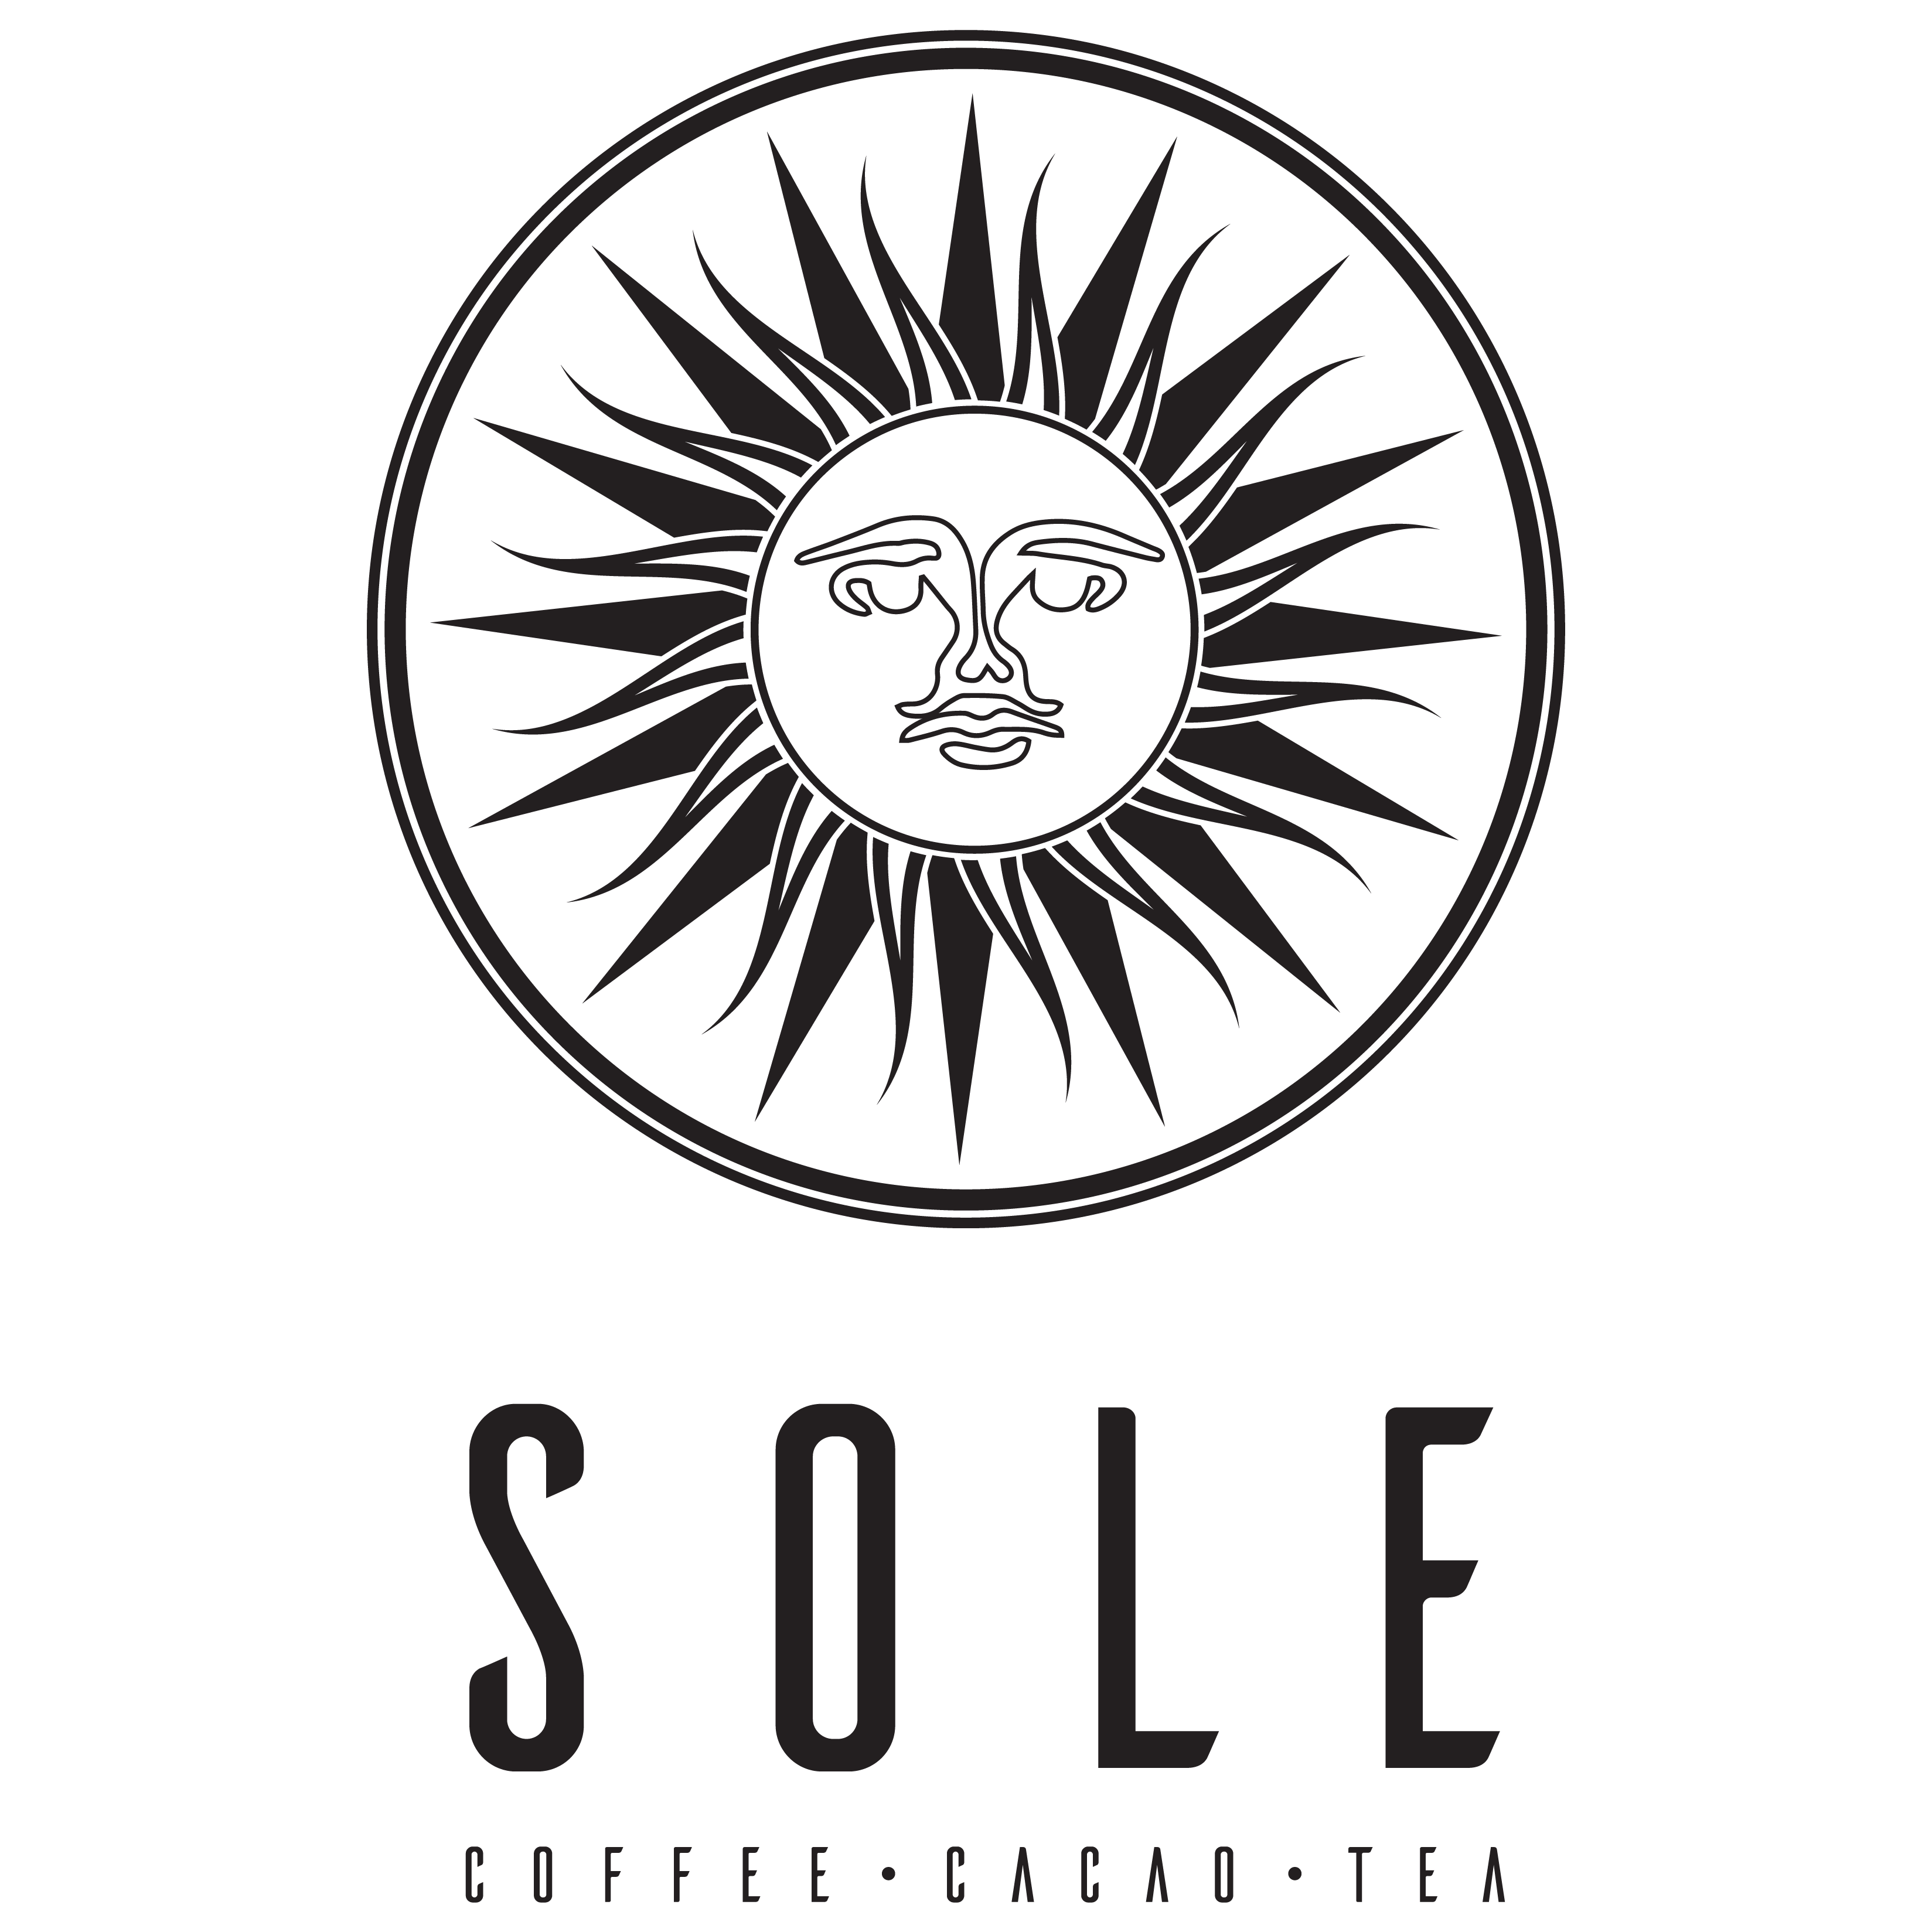 caffe sole app logo